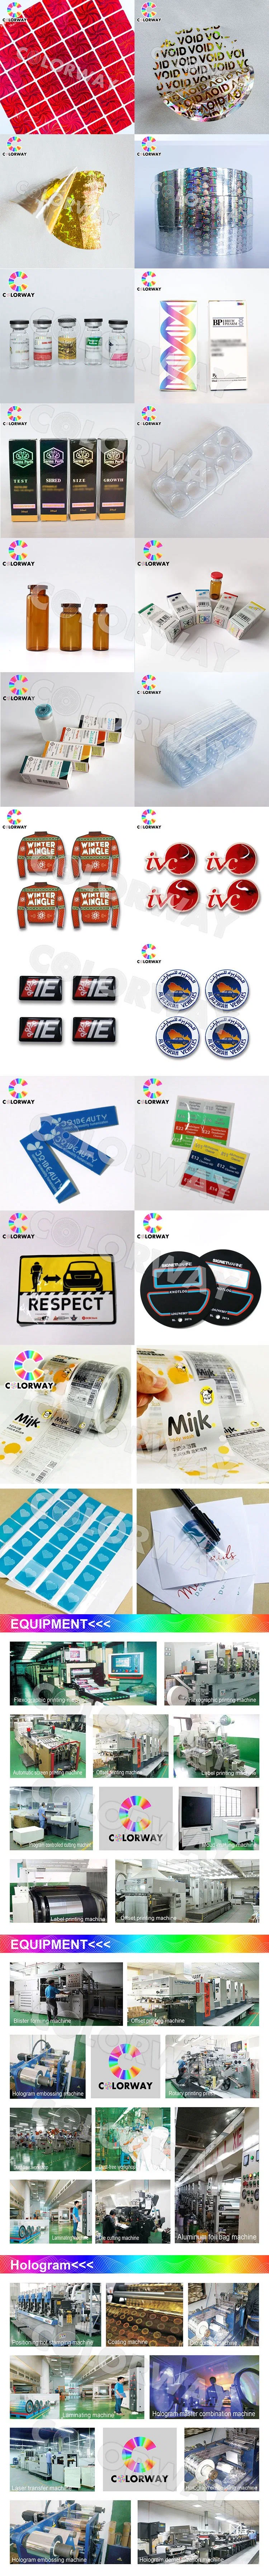 Custom Design Colorful Printing Transparent Plastic Self Adhesive Label